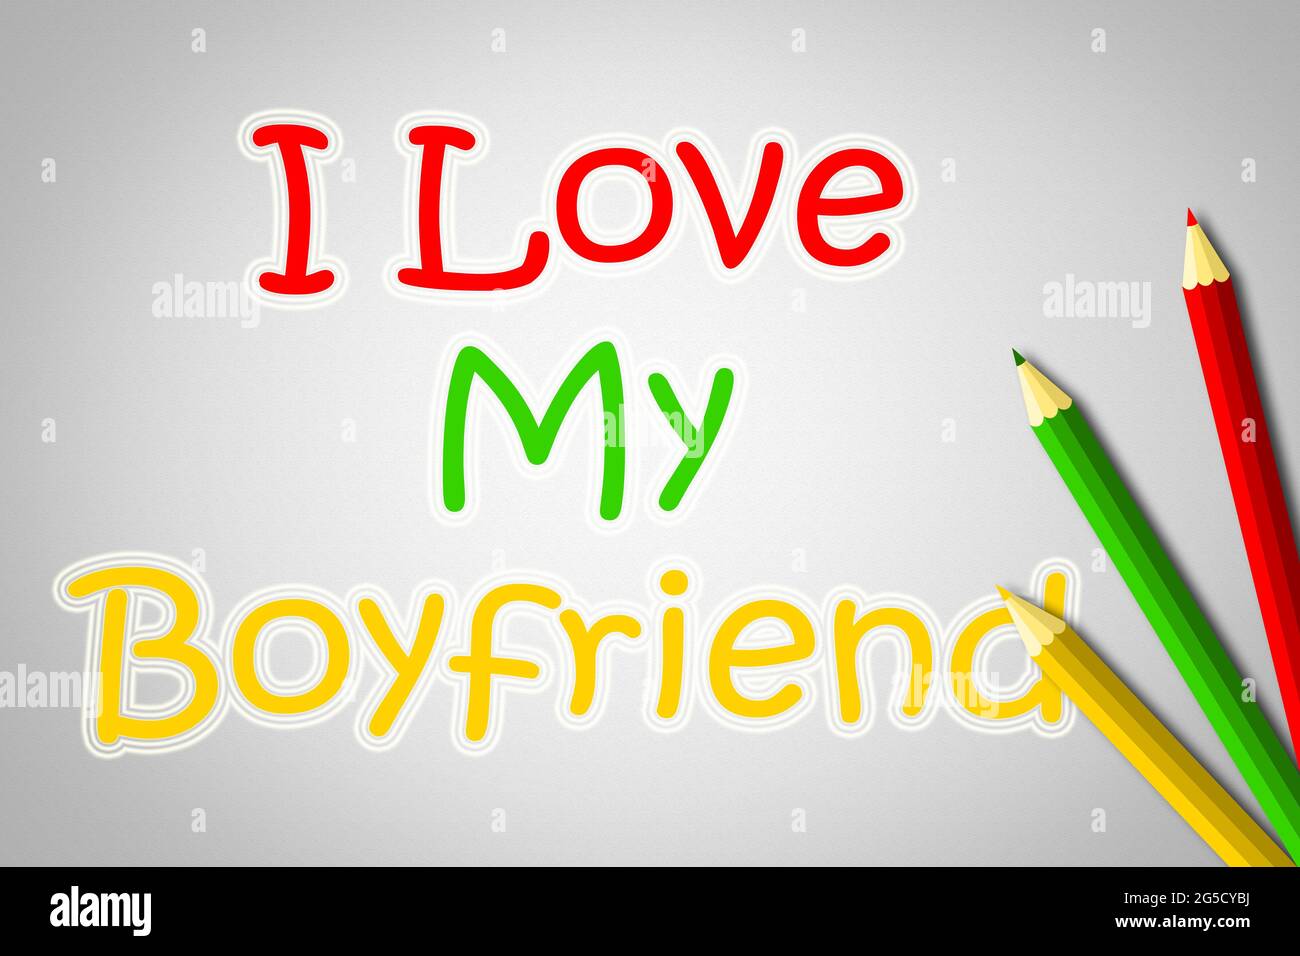 I Love My Boyfriend Concept text on background Foto Stock